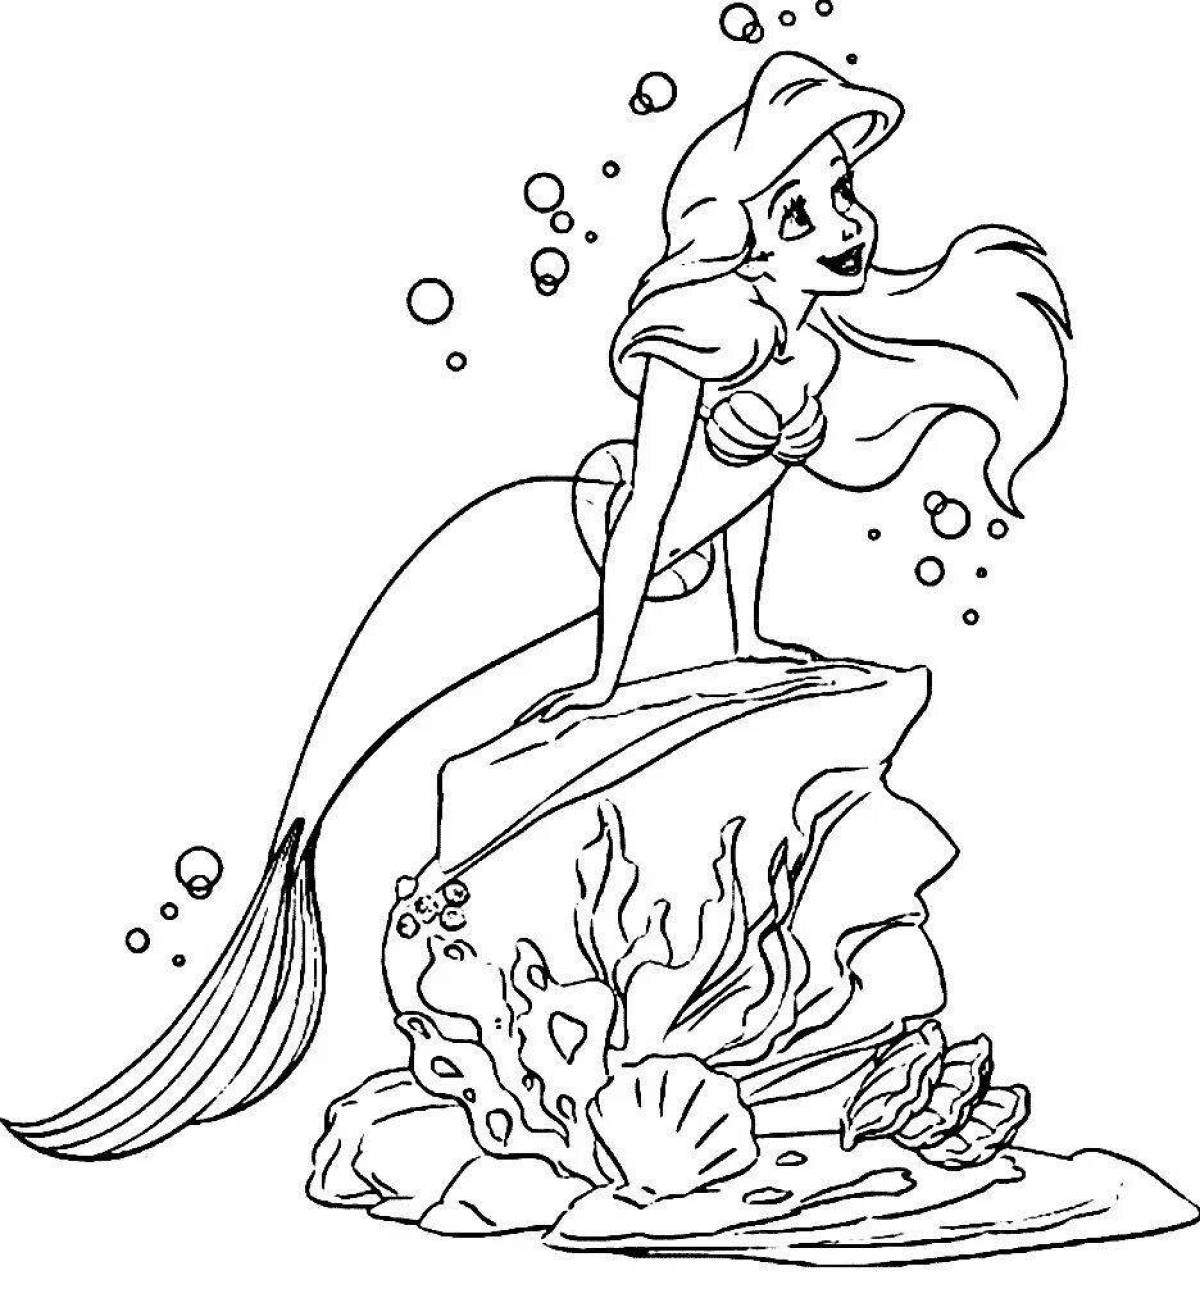 Playful disney little mermaid coloring book